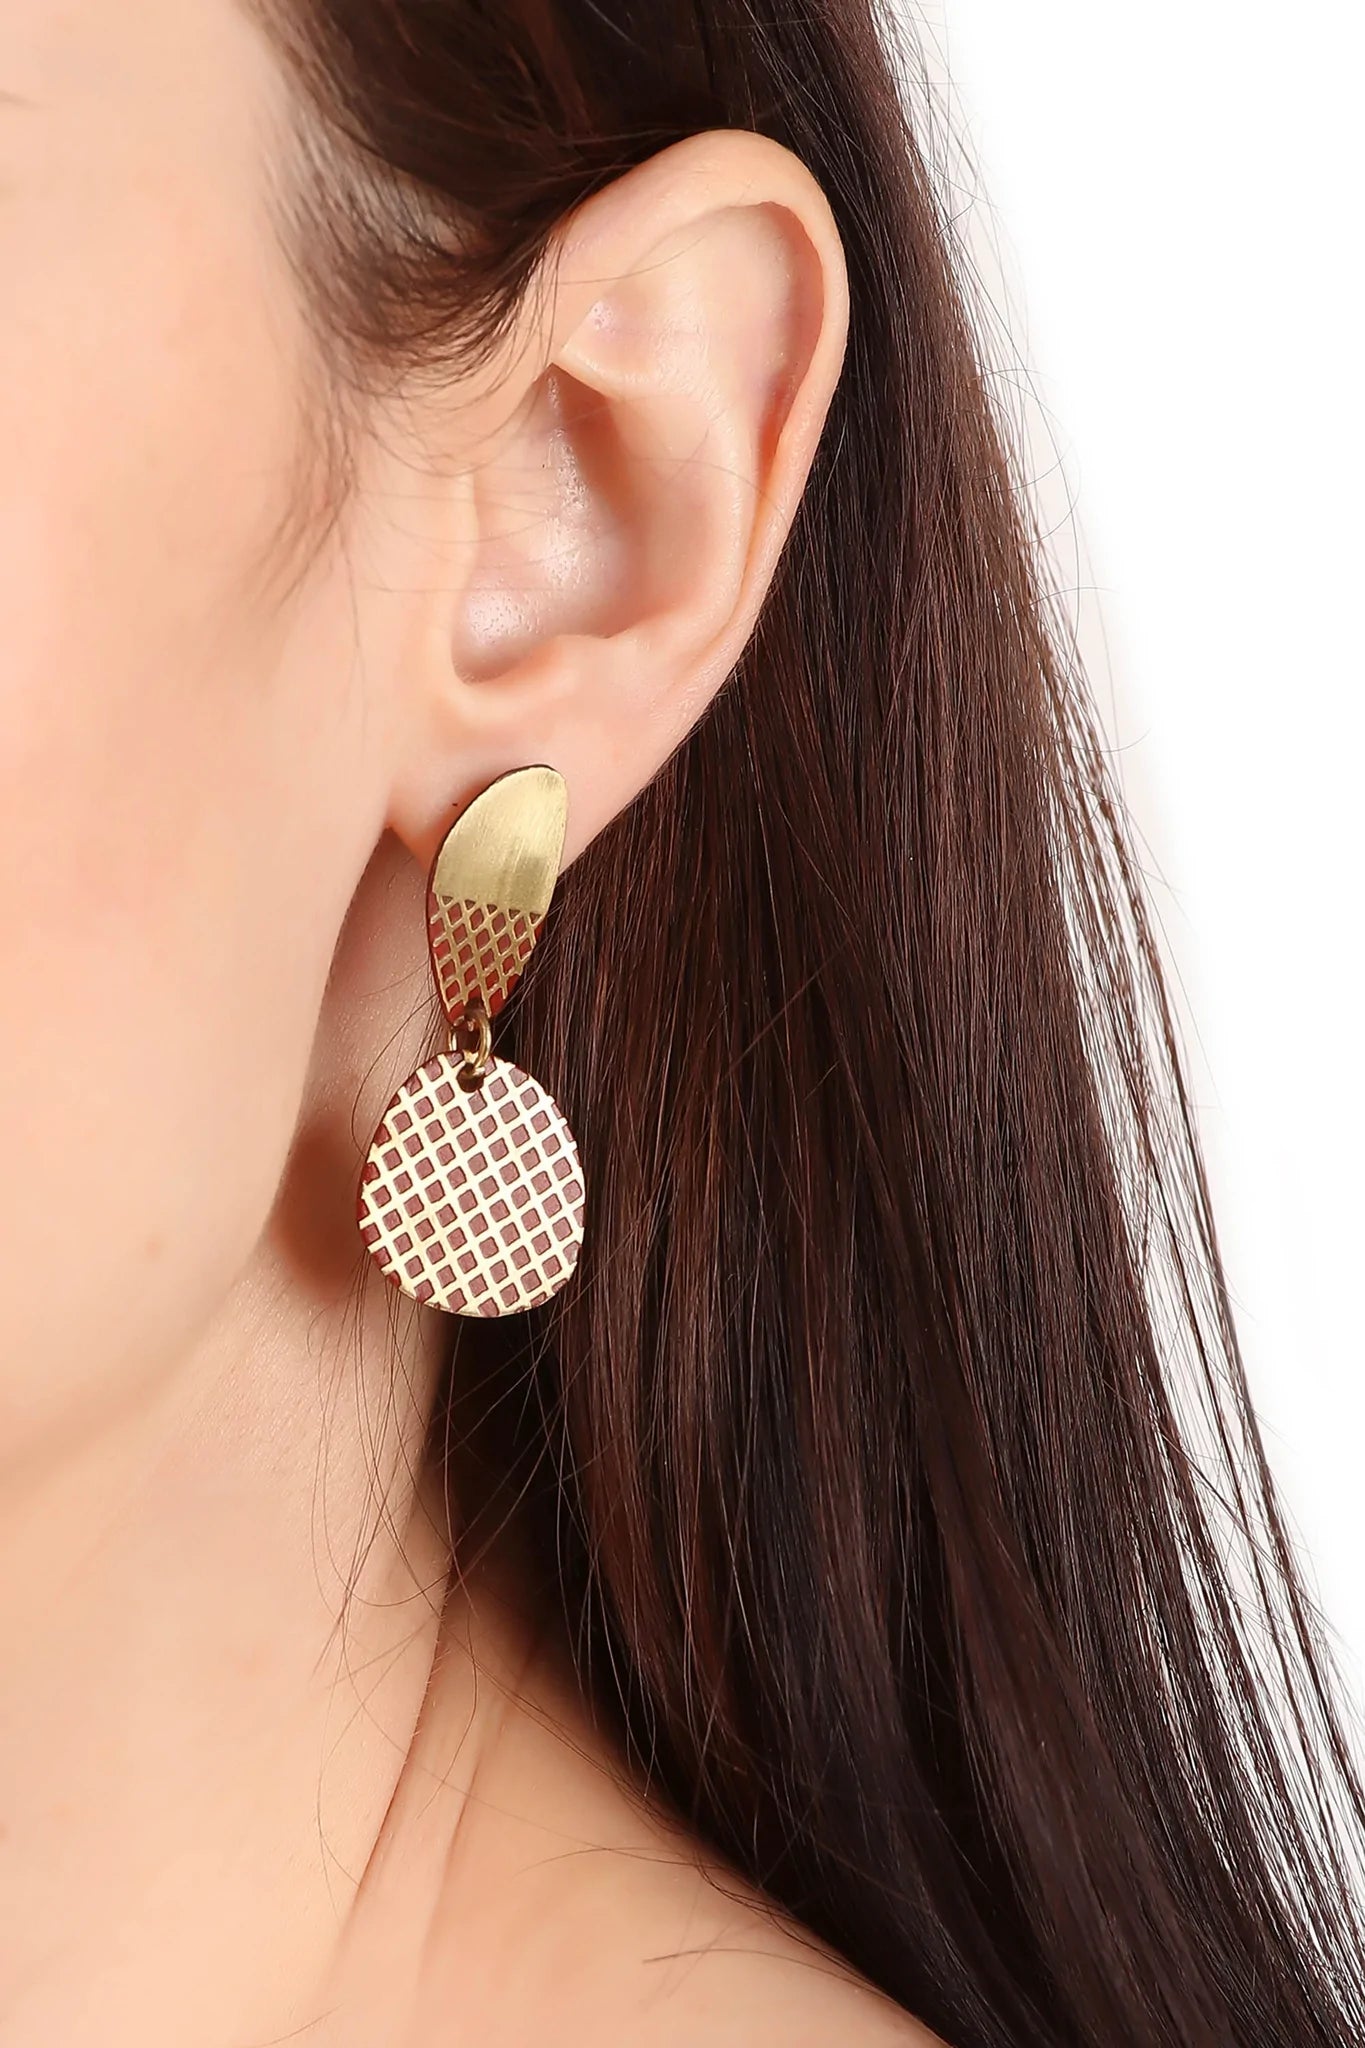 Red Maya Earrings - The Nancy Smillie Shop - Art, Jewellery & Designer Gifts Glasgow